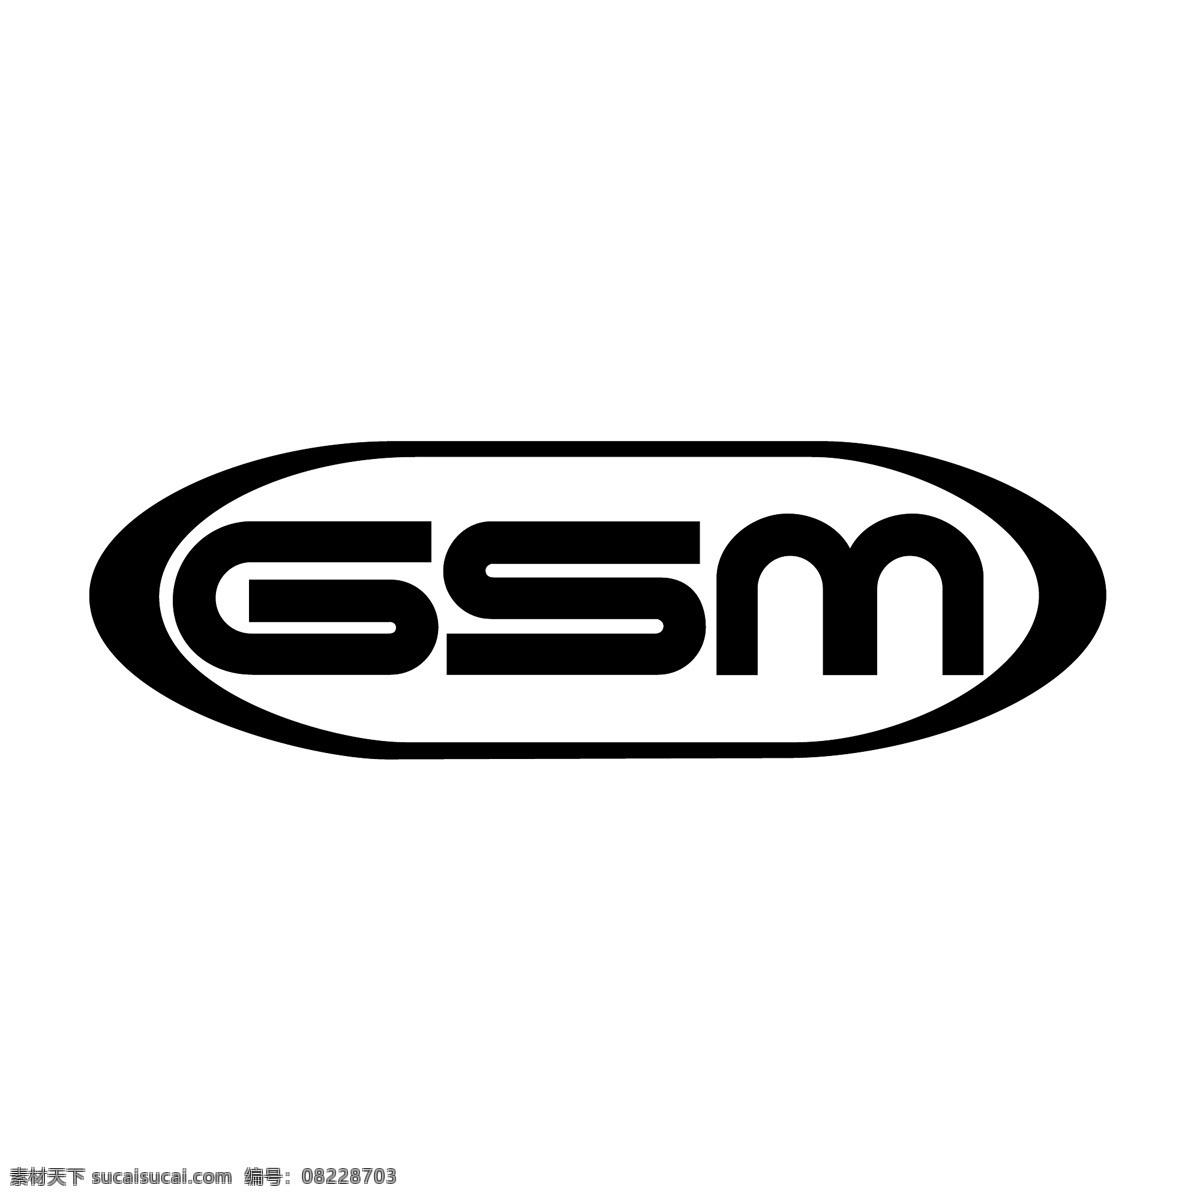 sim卡 gsm gsm矢量 矢量 标志 gsm剪贴画 矢量gsm 加上gsm eps向量 baltcom ms1共和国 矢量gsm卡 gsm手机 sim 卡